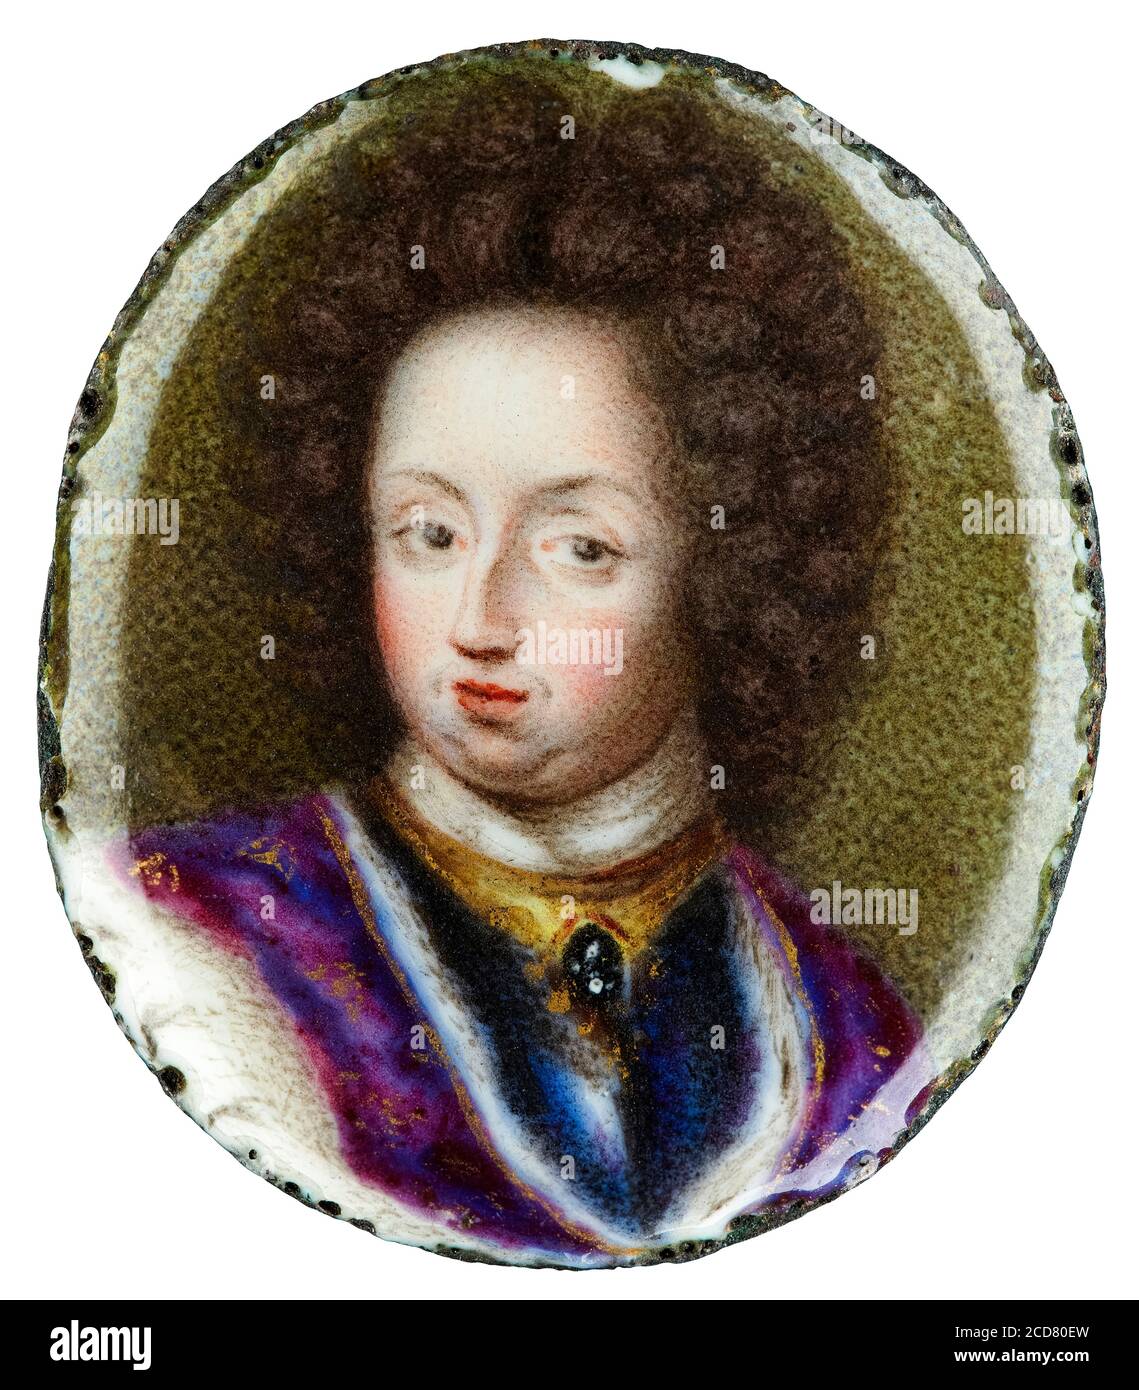 Charles XI (1655-1697), Rey de Suecia, miniatura retrato por Eric Utterhielm, alrededor de 1690 Foto de stock